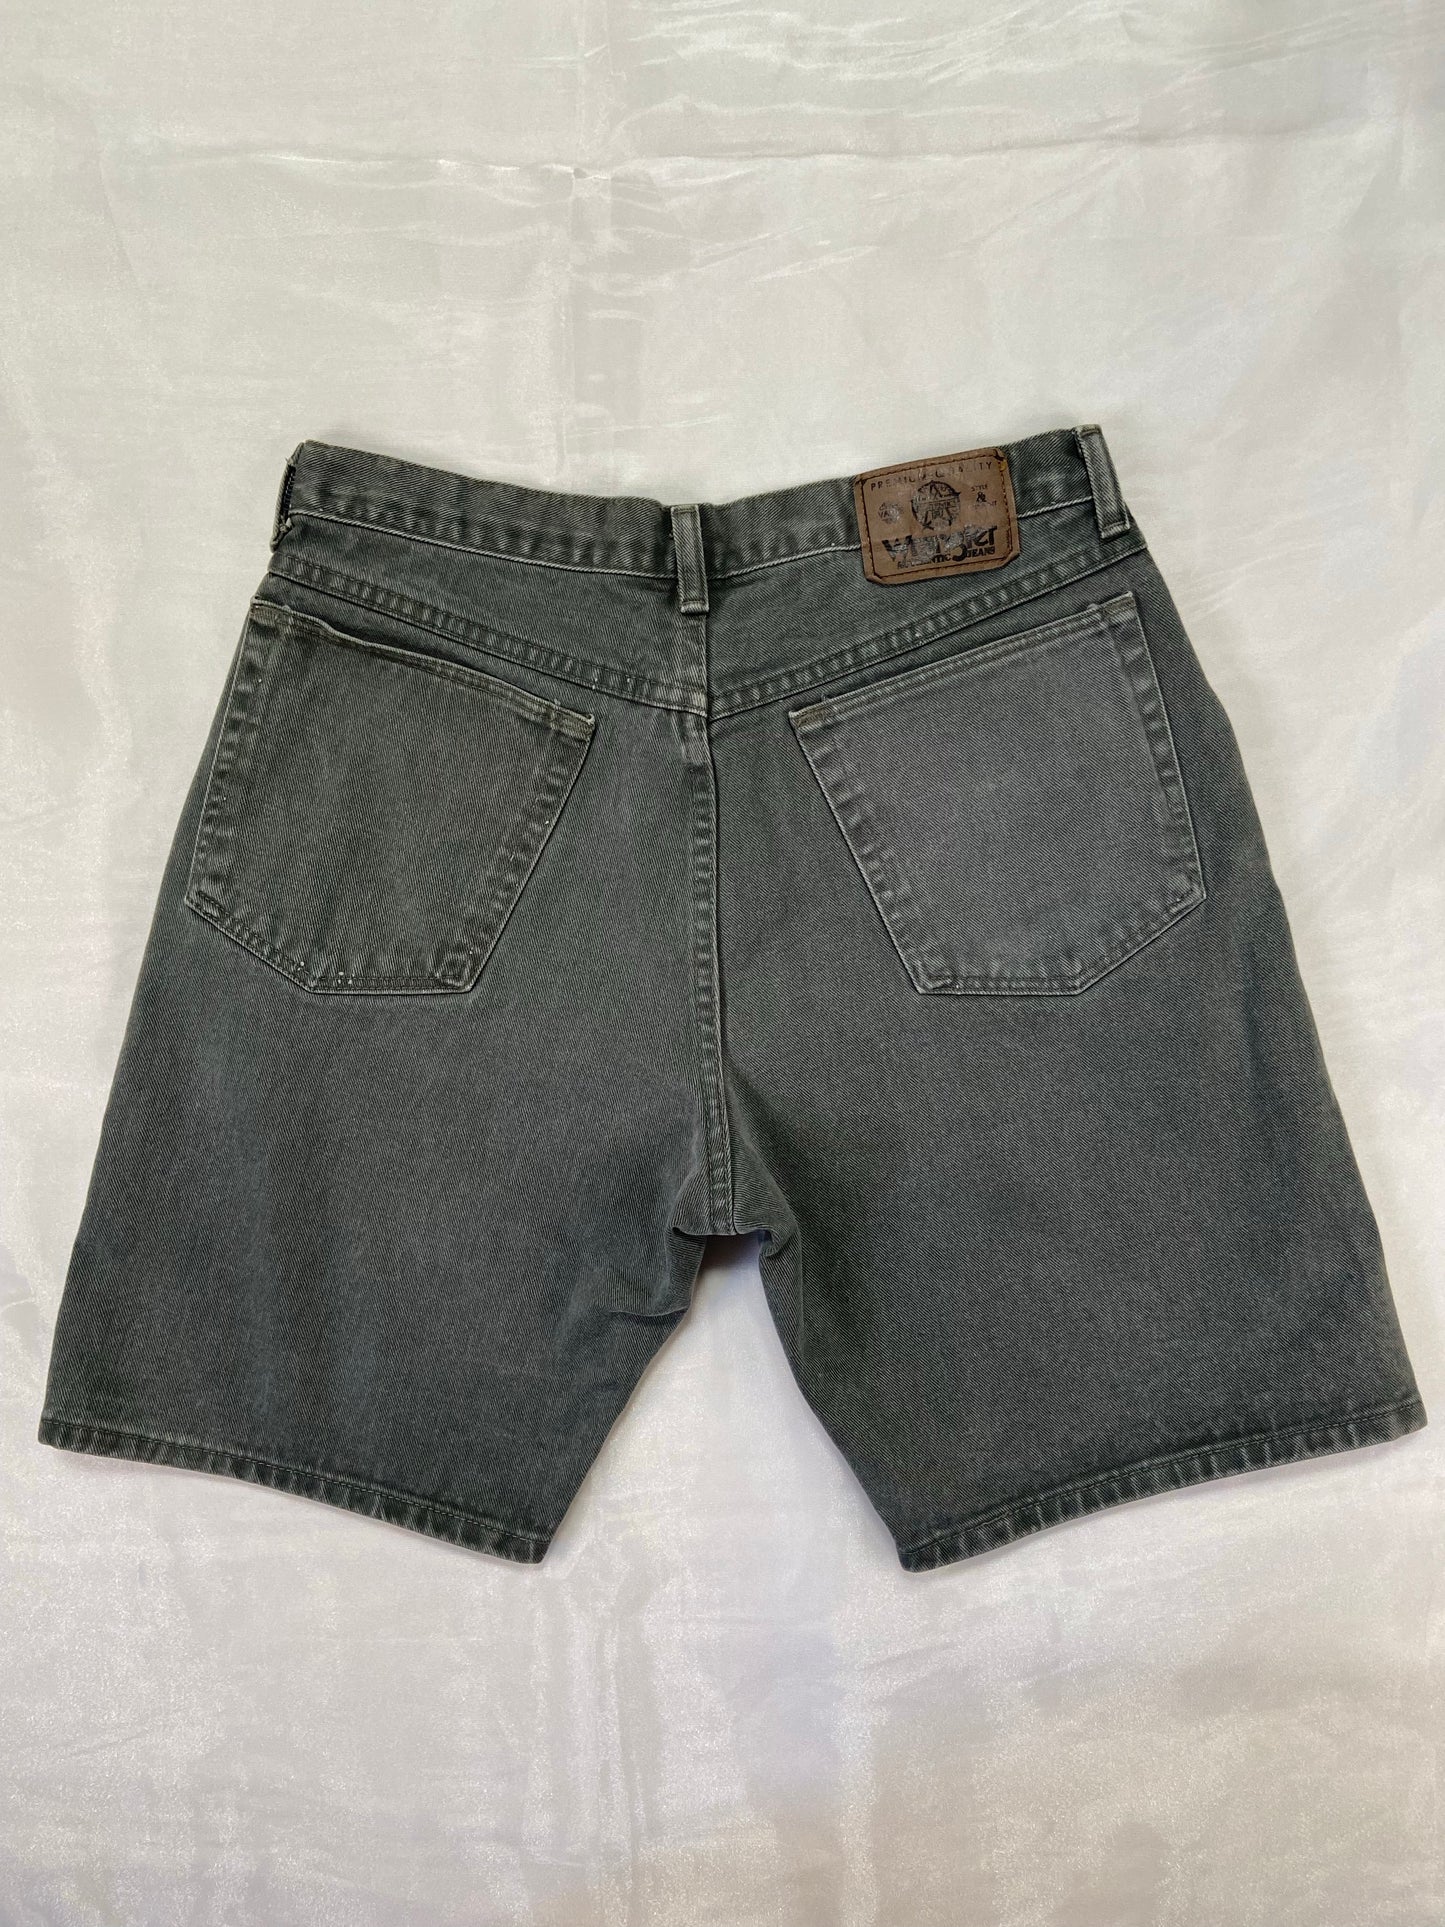 Olive Wrangler Denim Shorts - 30”